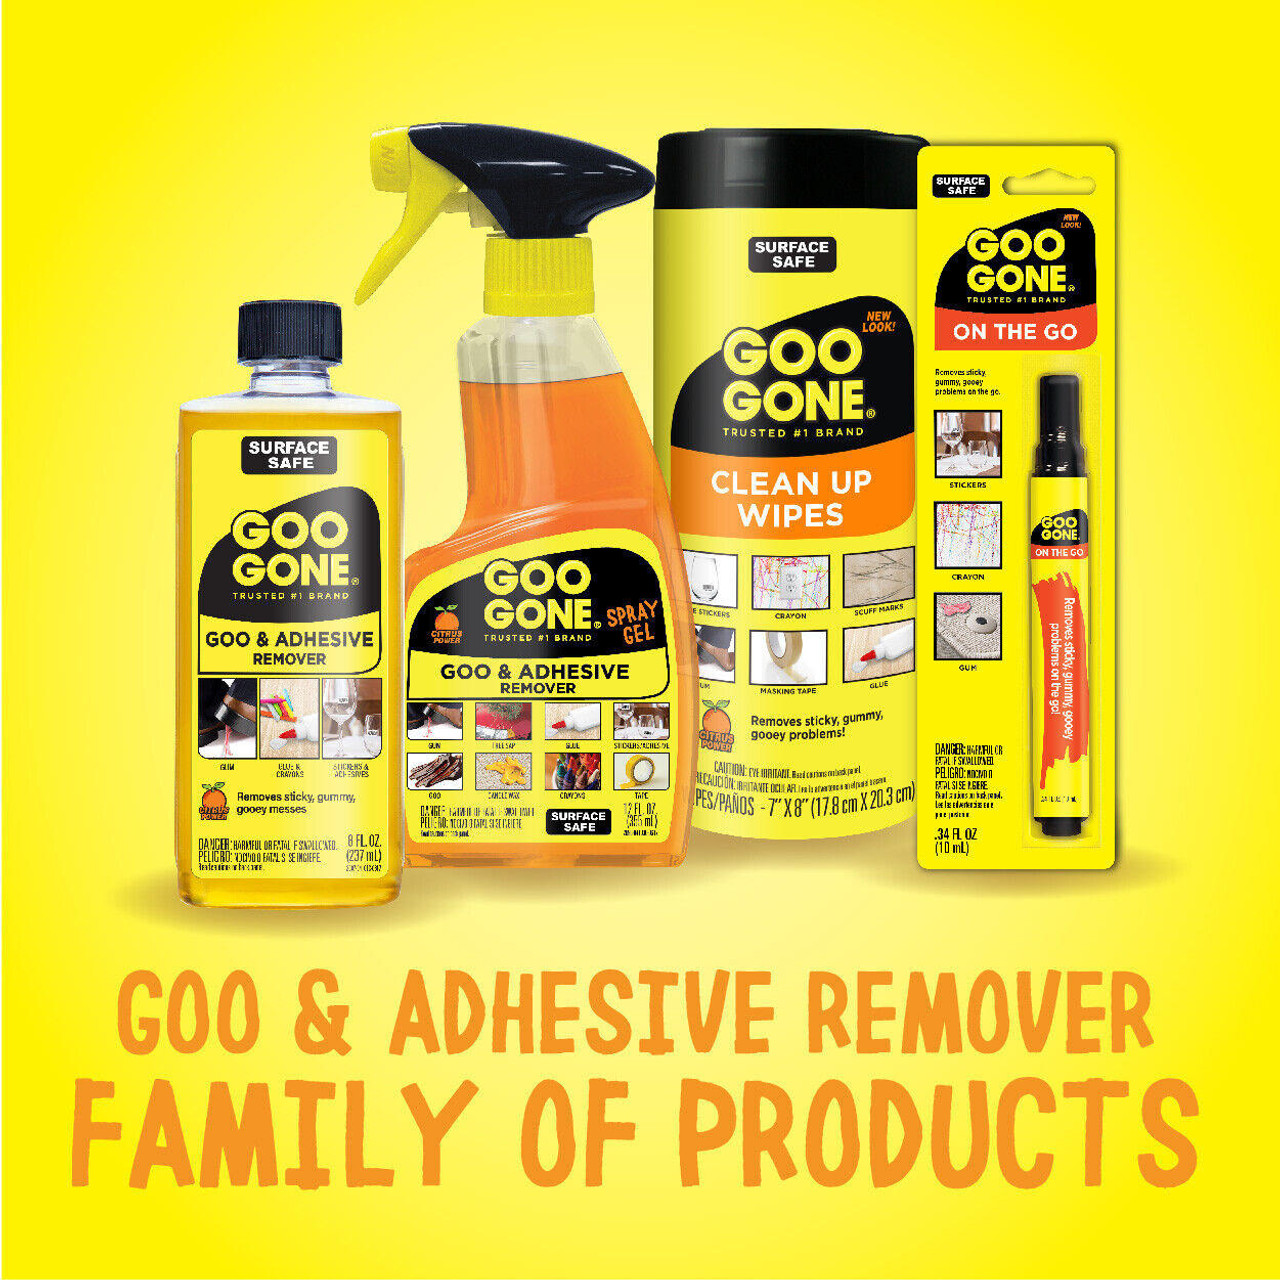 Goo Gone Automotive Goo and Sticker Remover Liquid 16oz